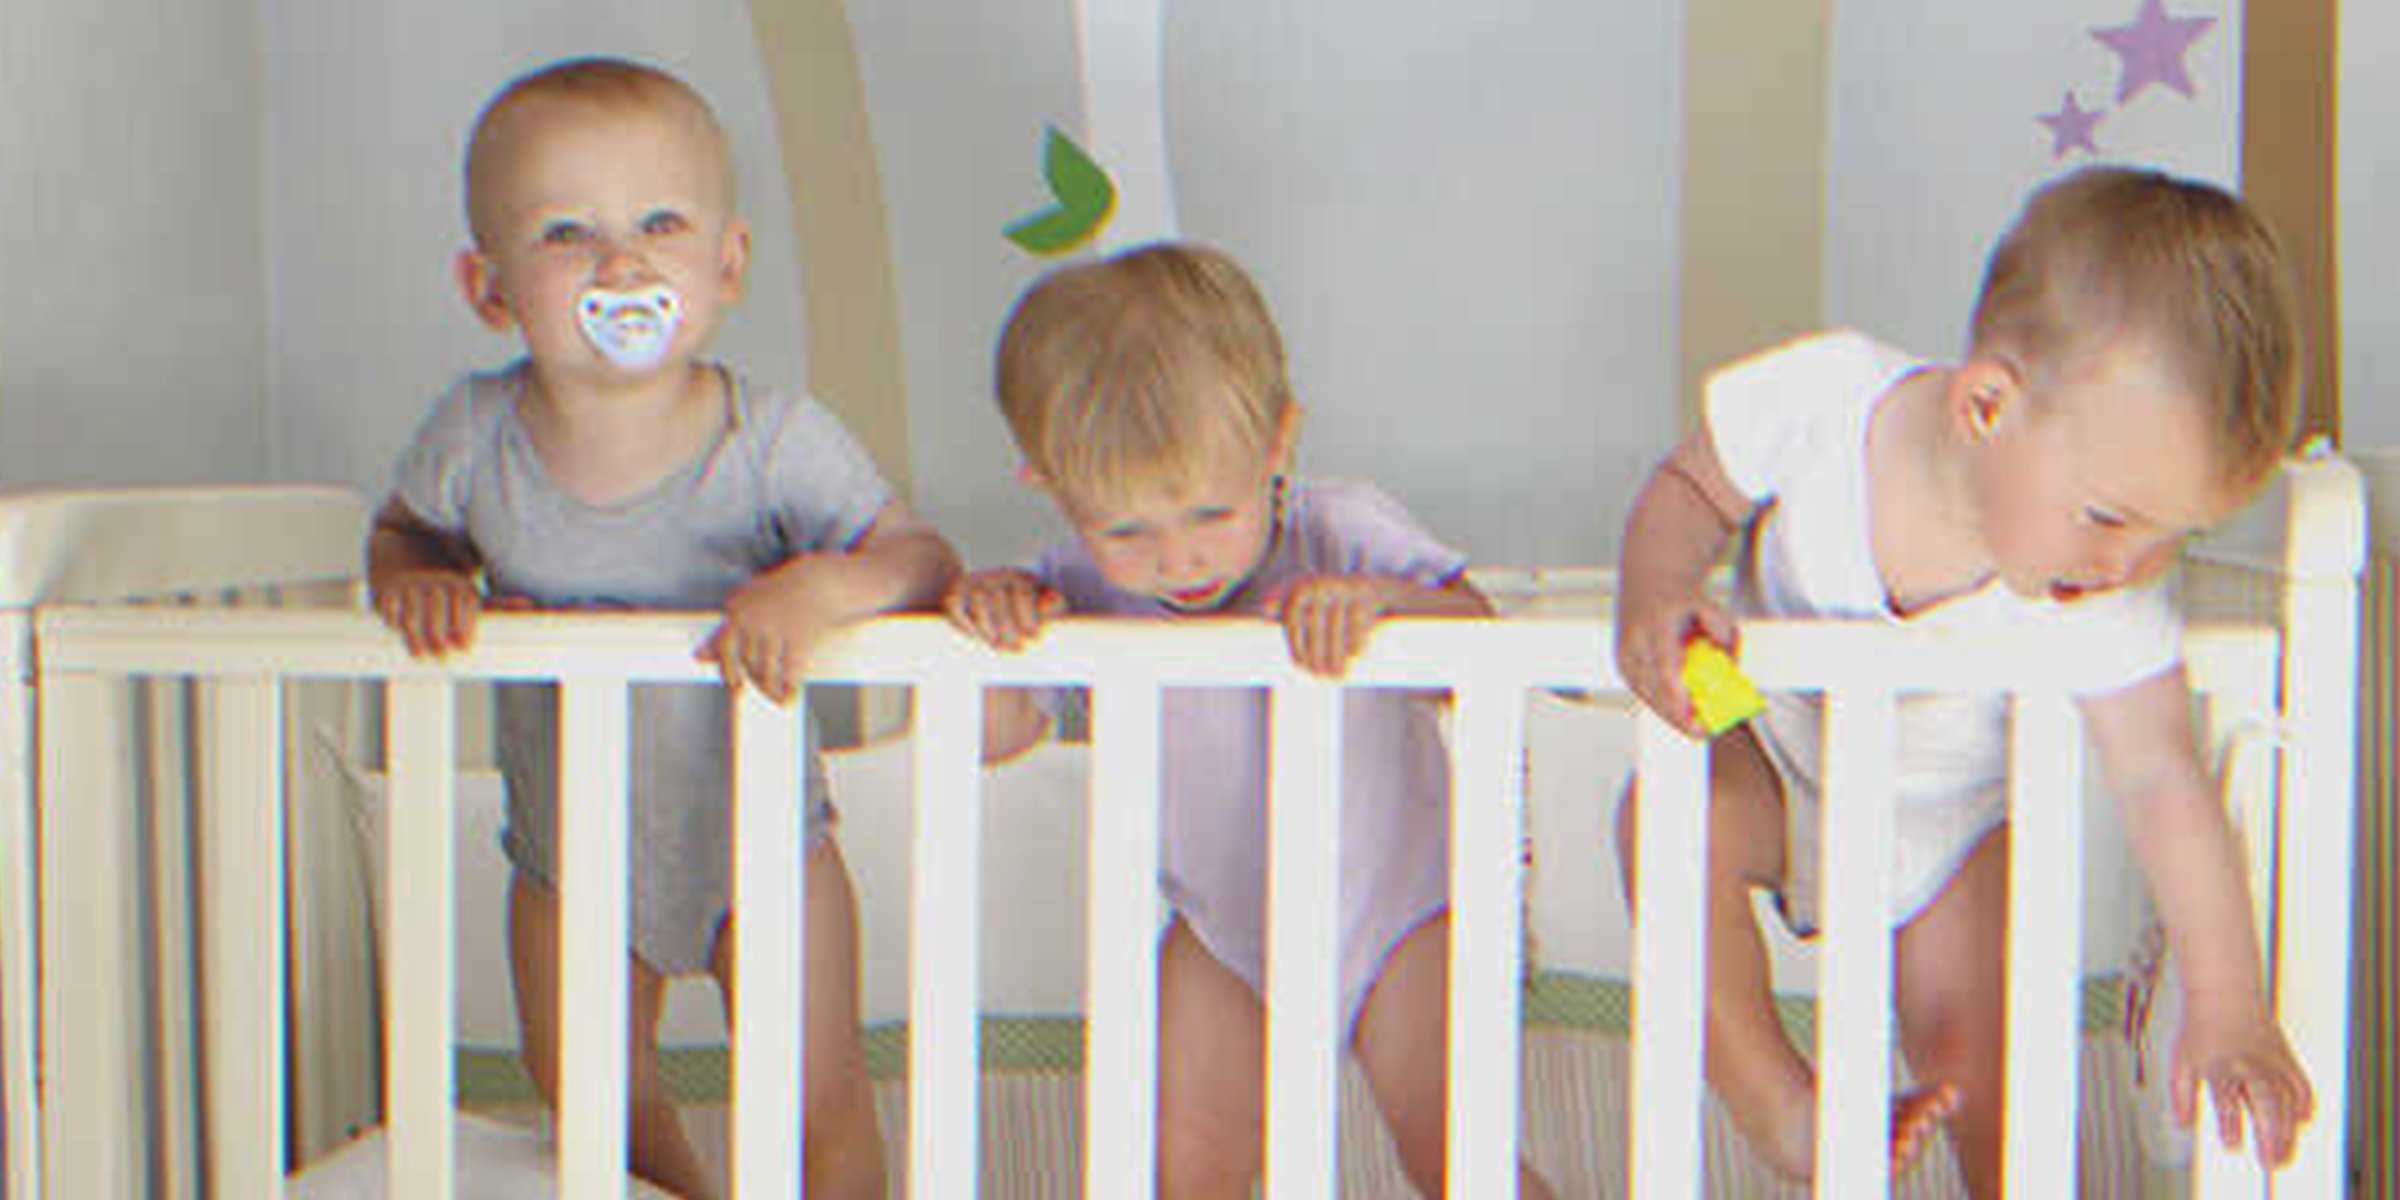 Triplets in a crib | Source: Shutterstock